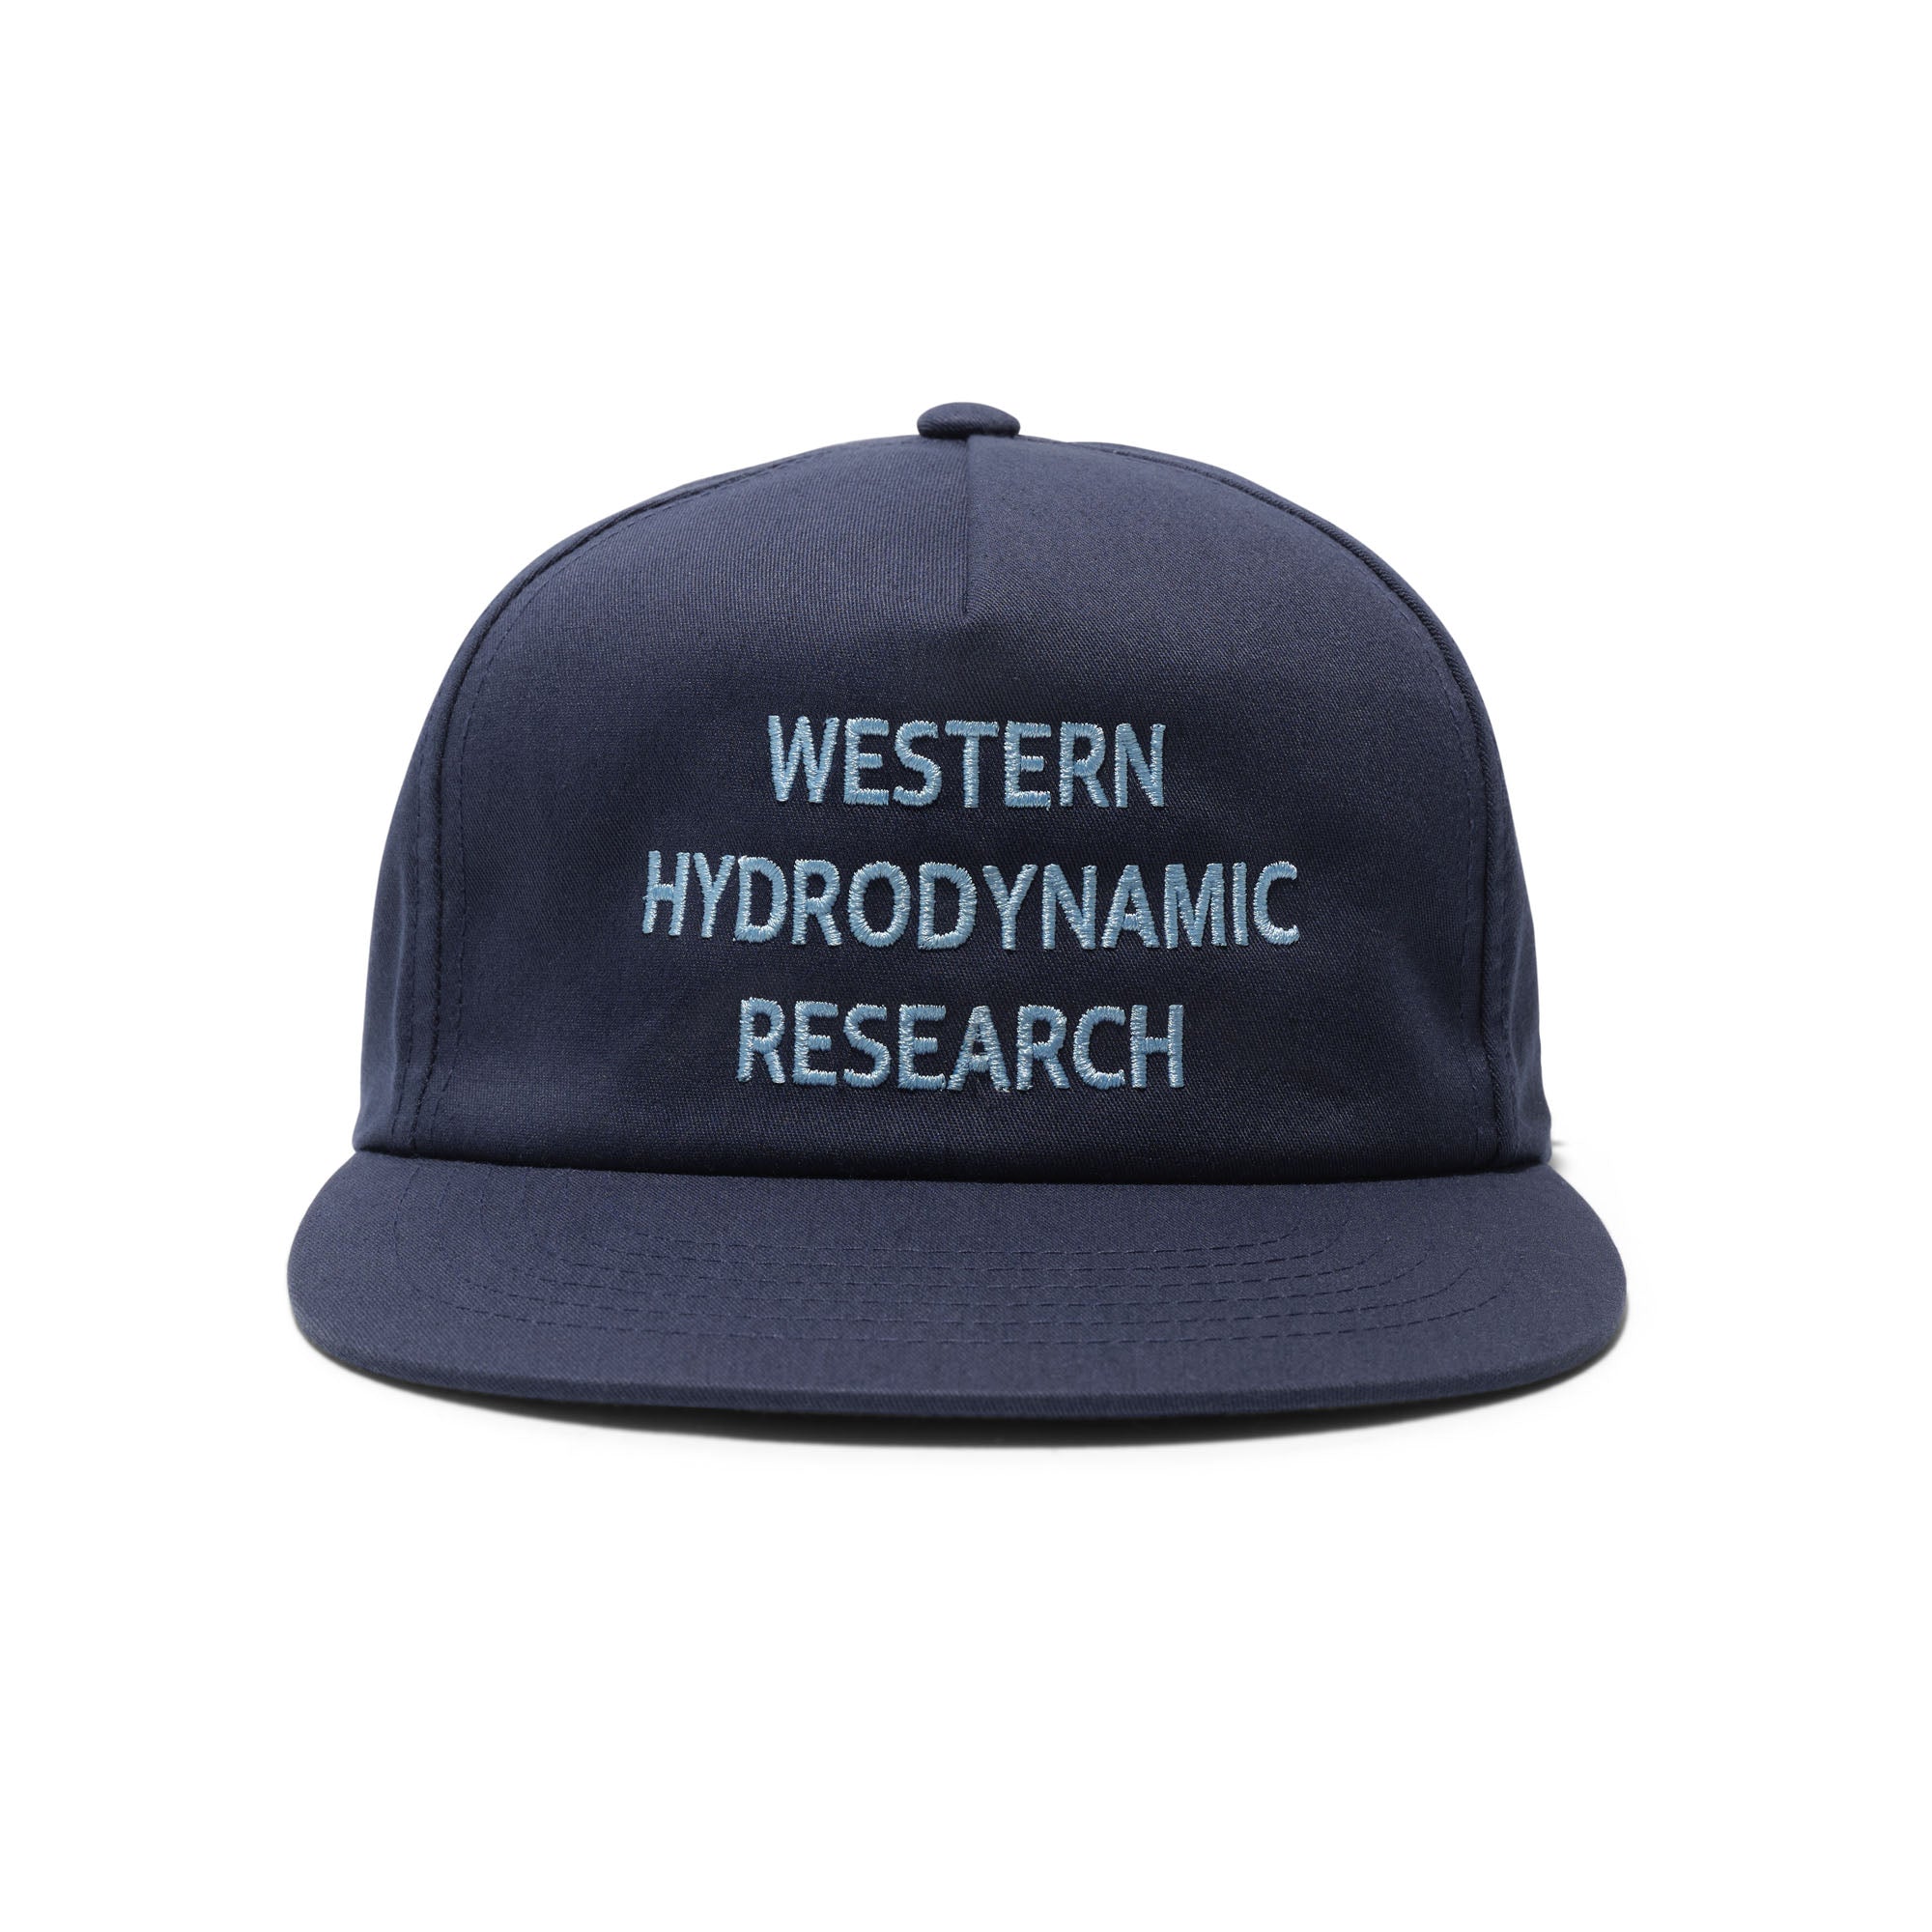 Promotional Hat (Navy/Blue)